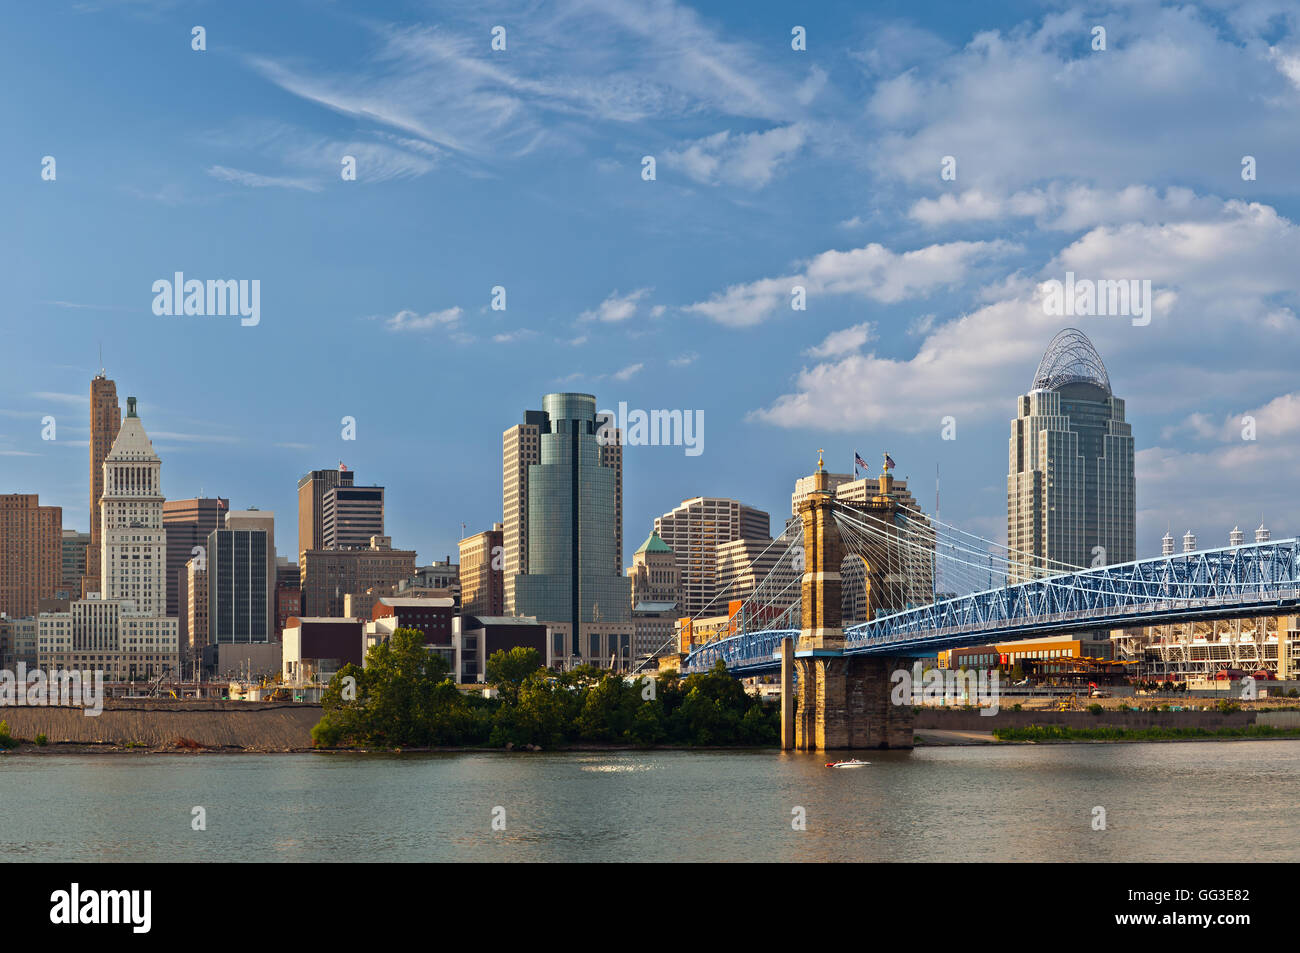 Image of Cincinnati skyline and historic John A. Roebling suspension bridge cross Ohio River. Stock Photo